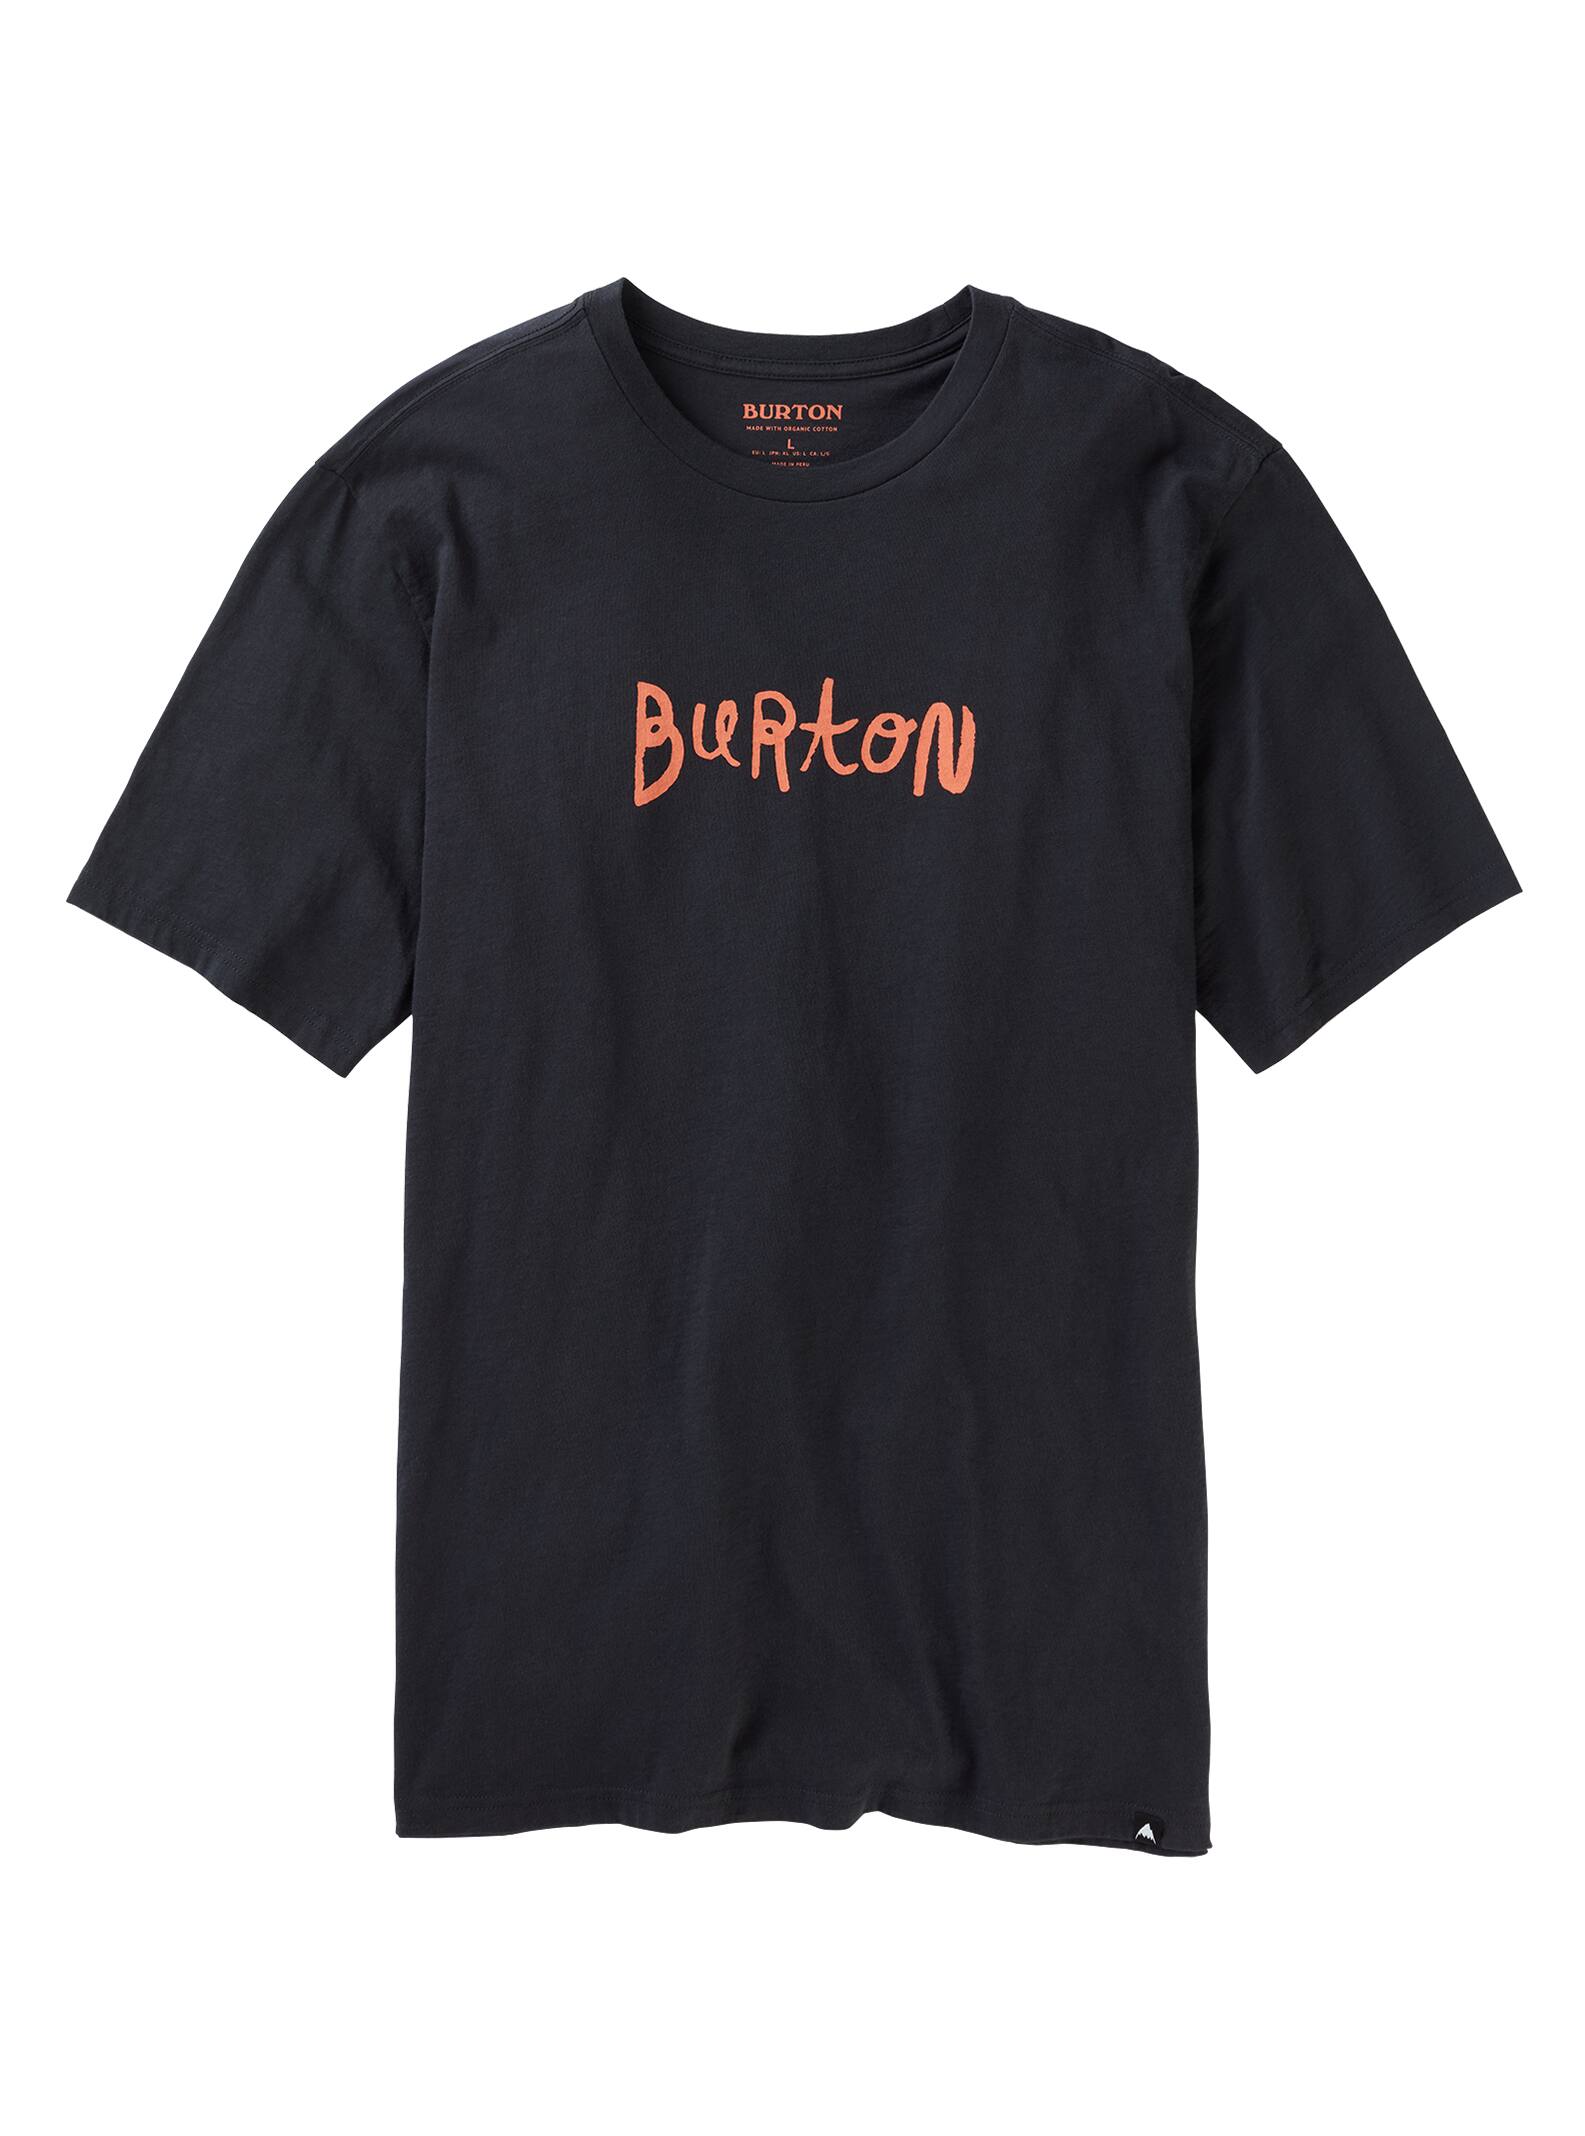 Burton - T-shirt manches courtes Flight Attendant homme, True Black, S